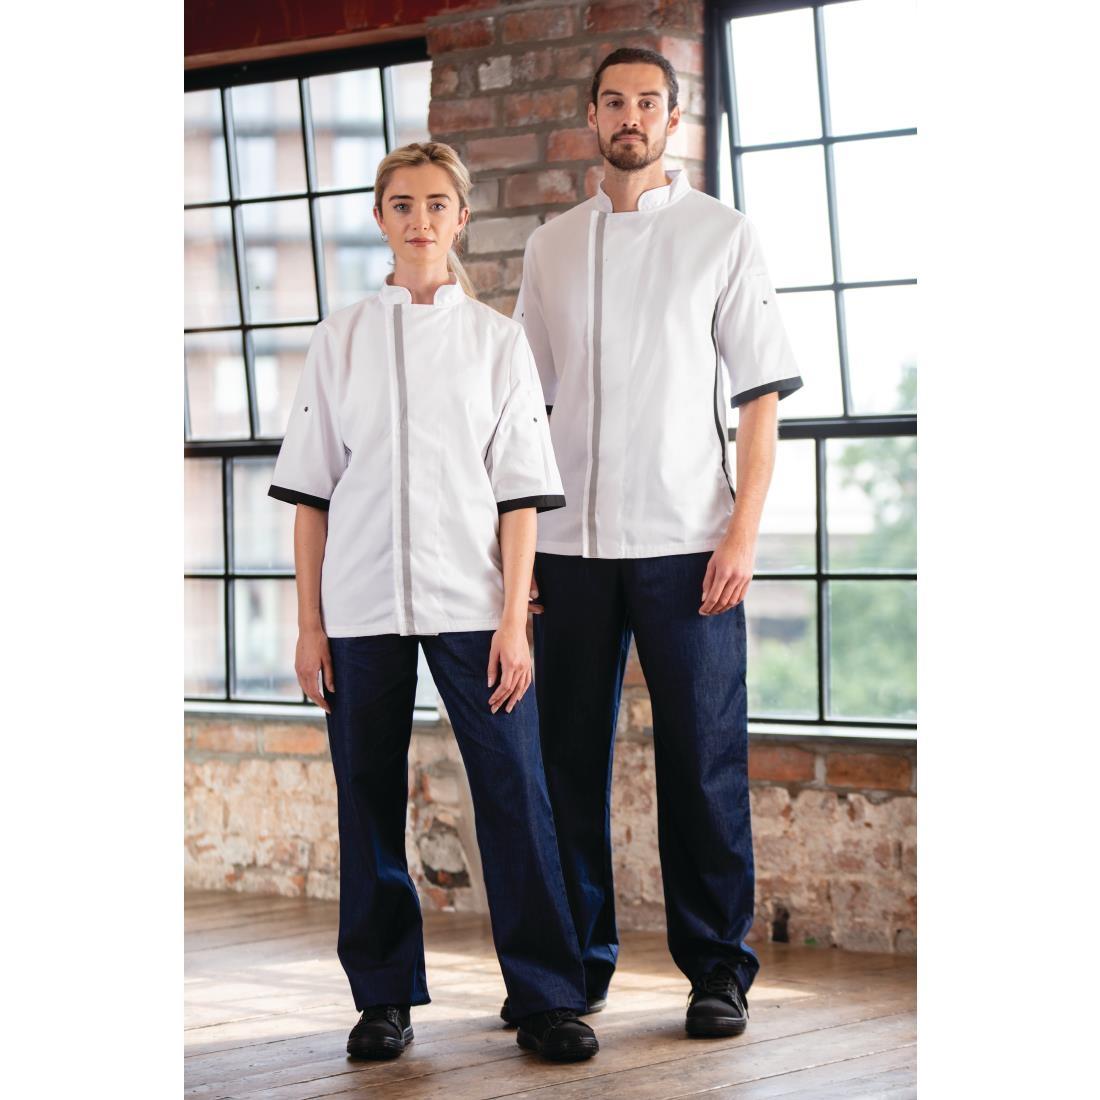 Southside Unisex Chefs Jacket Short Sleeve White XL - B998-XL  - 10